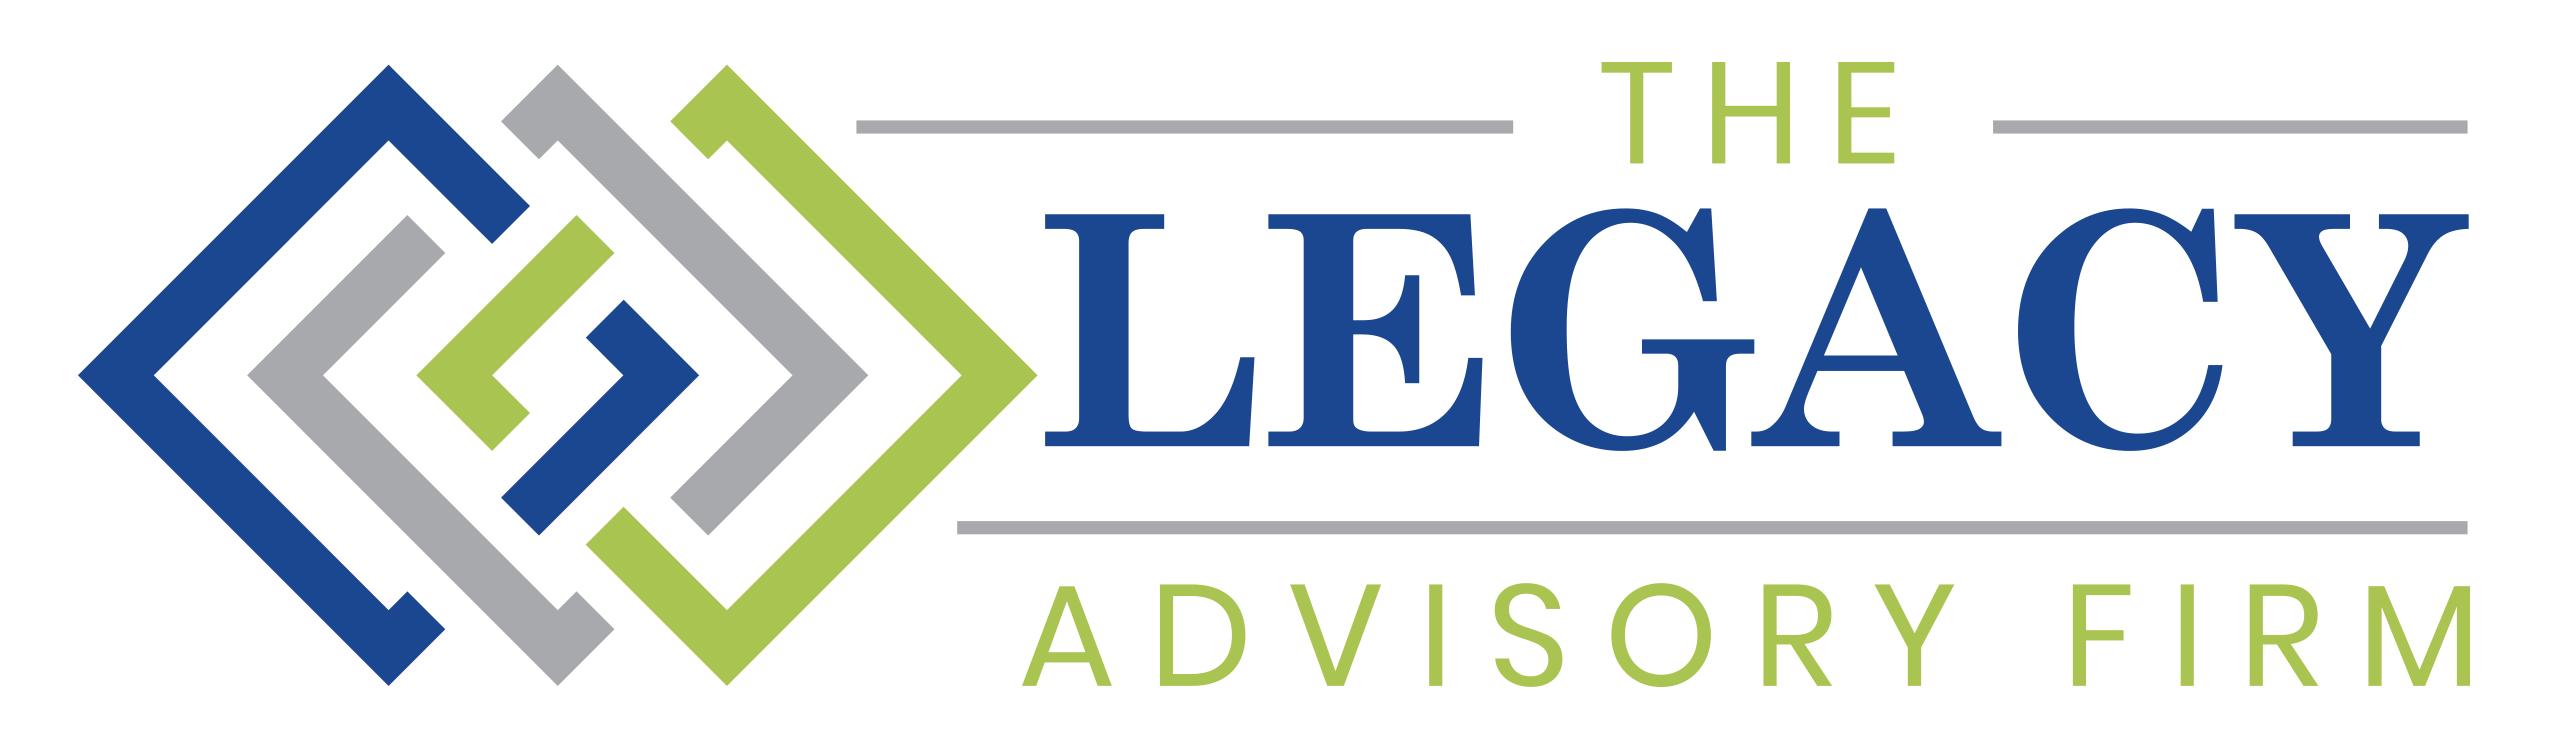 The Legacy Advisory Firm LLC logo